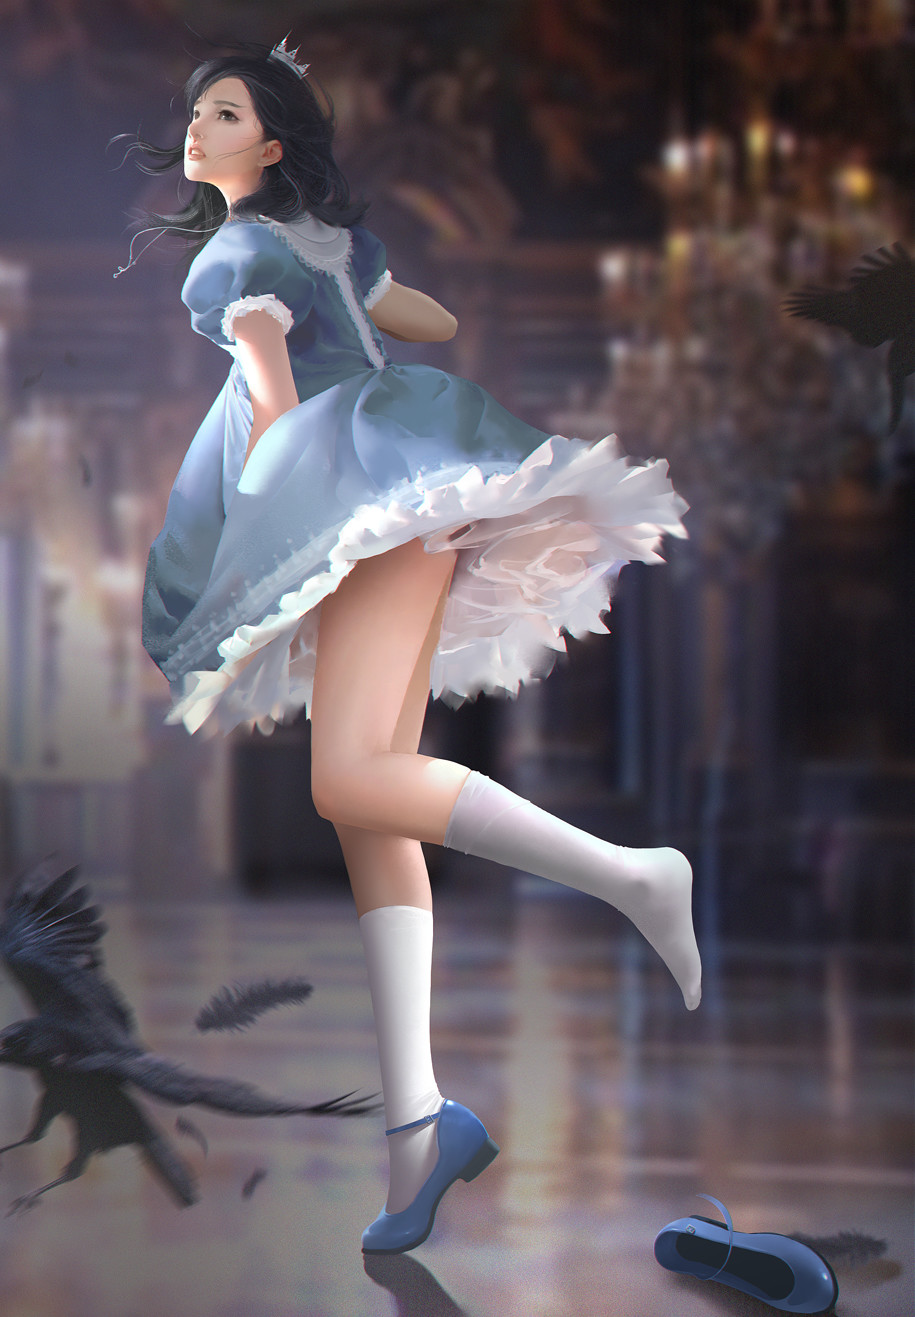 Bason Chen Artwork Women Digital Art Fantasy Art Fantasy Girl Socks Legs Dress Blue Dress Birds Dark 915x1317